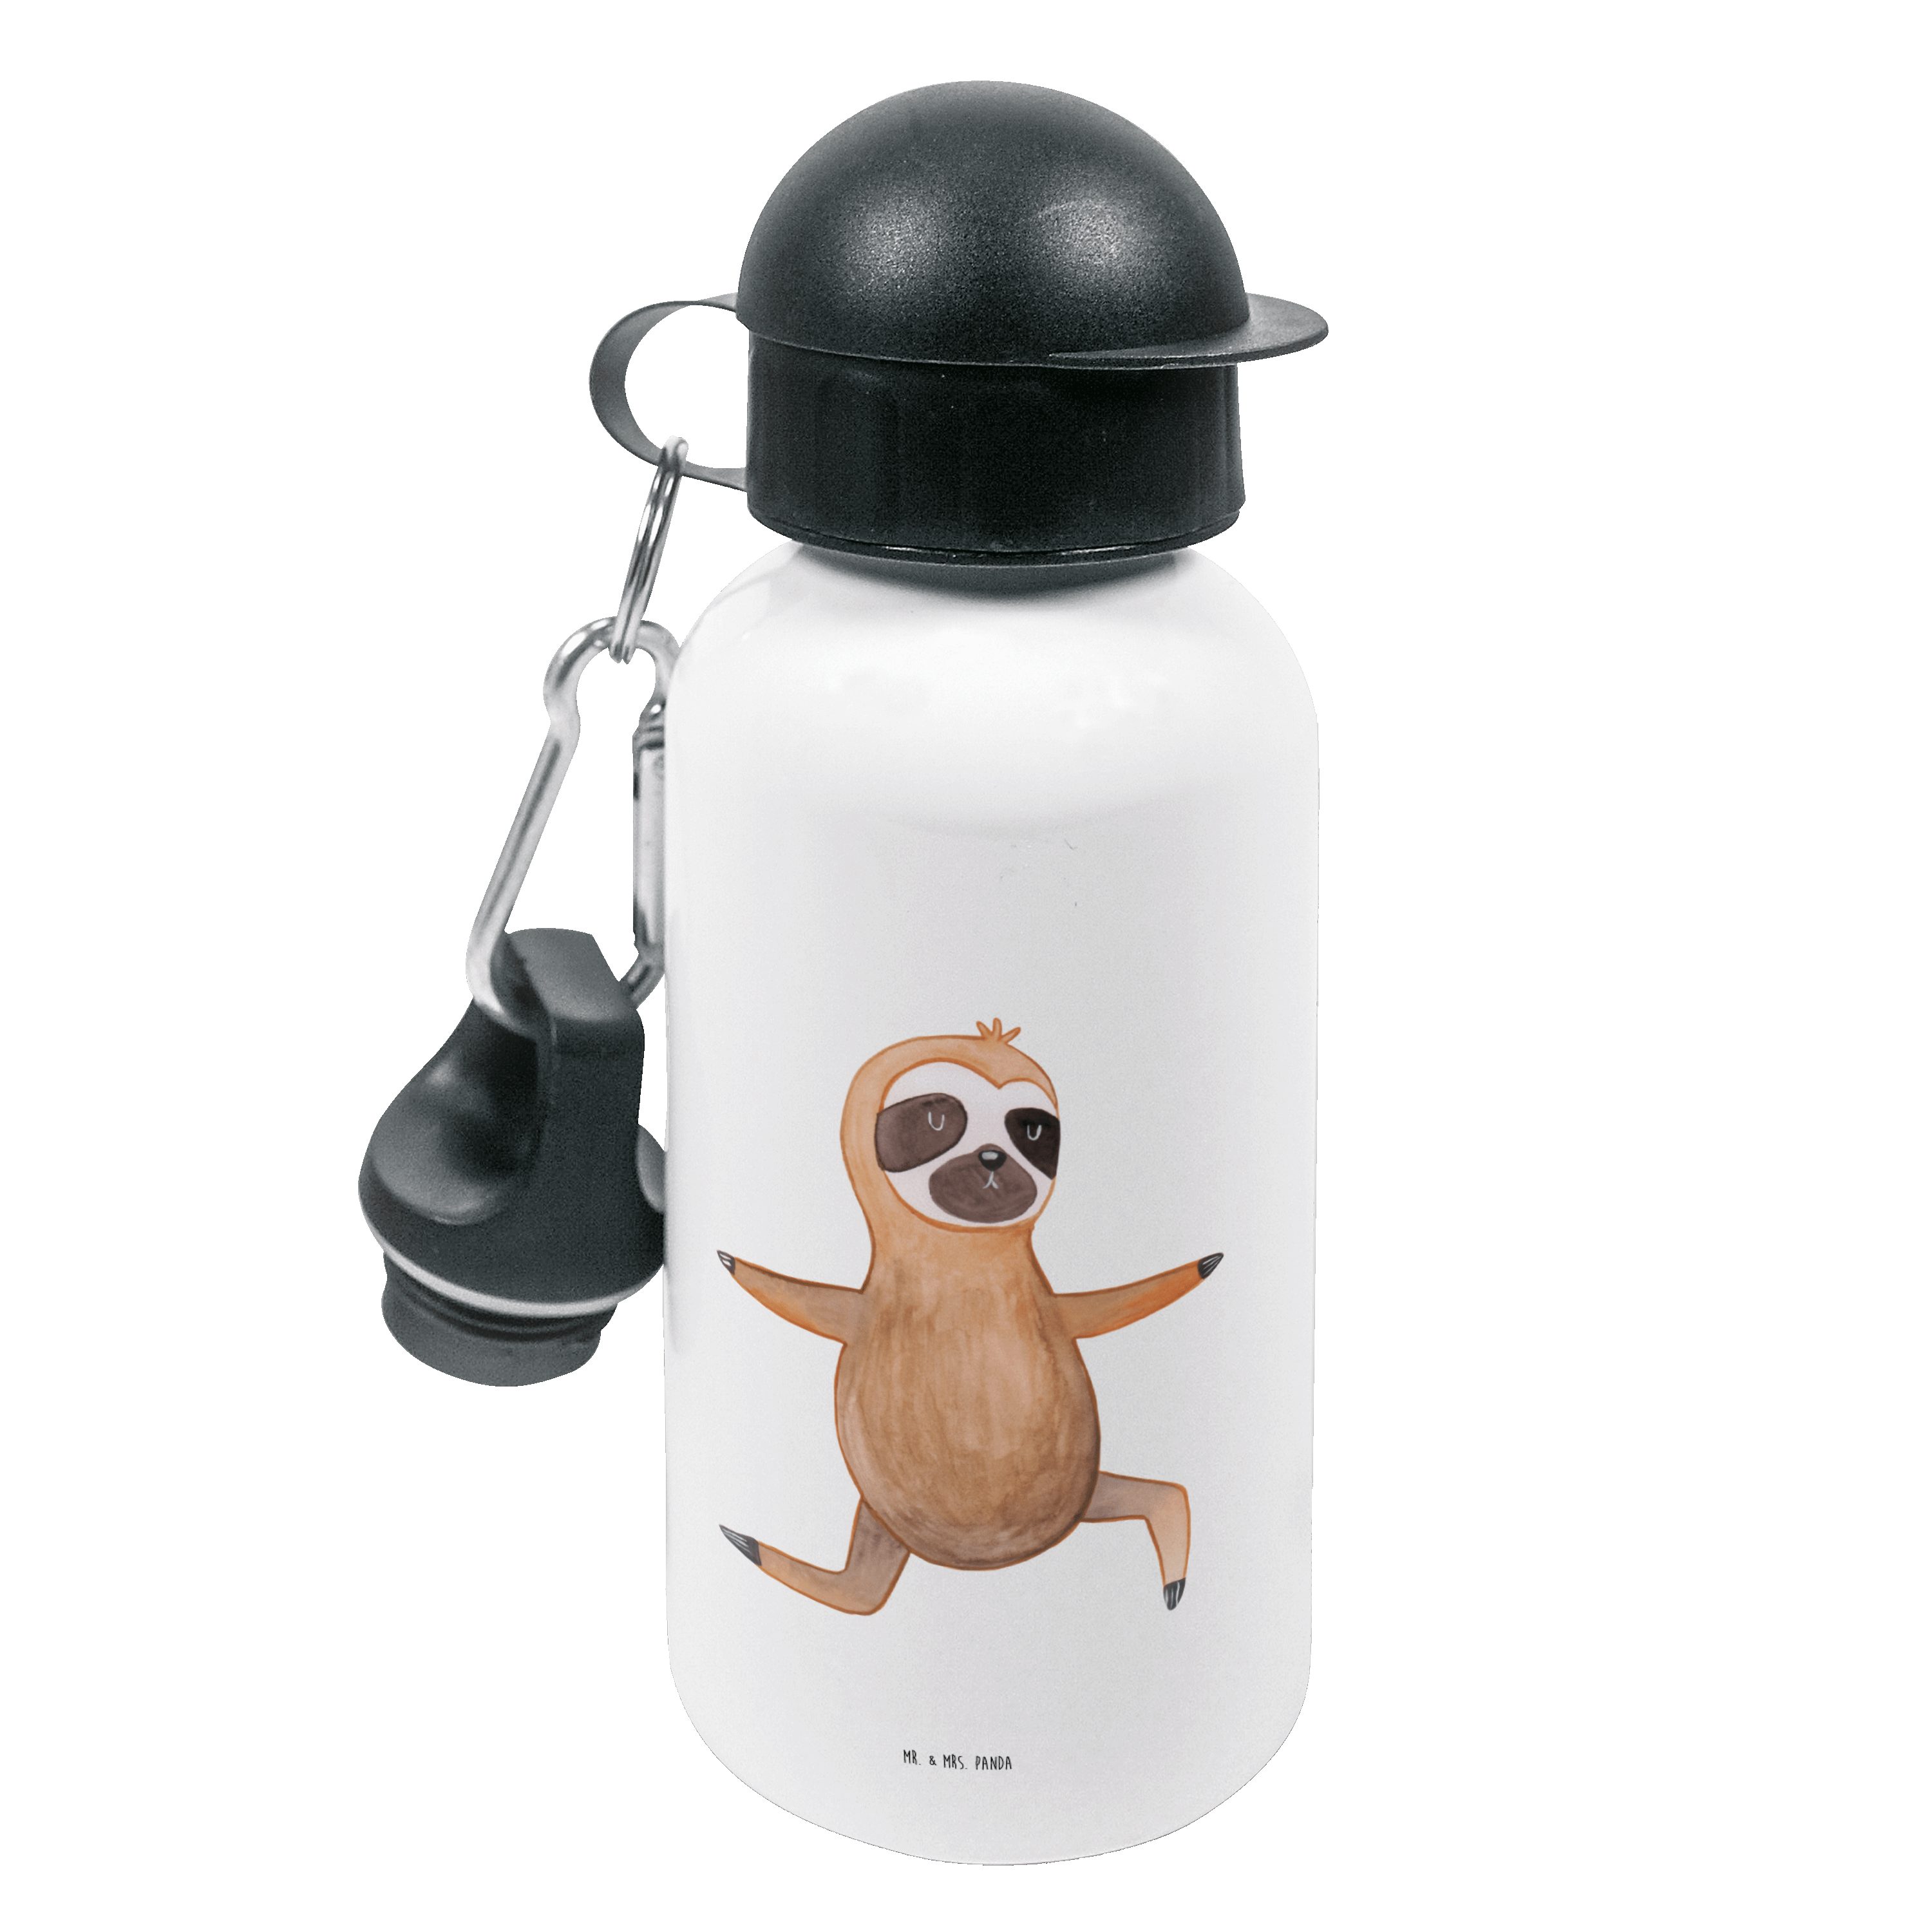 Mr. & Mrs. Panda Trinkflasche Faultier Yoga - Weiß - Geschenk, Krieger, Mädchen, Kindergarten Flasc, Leicht zu öffnen